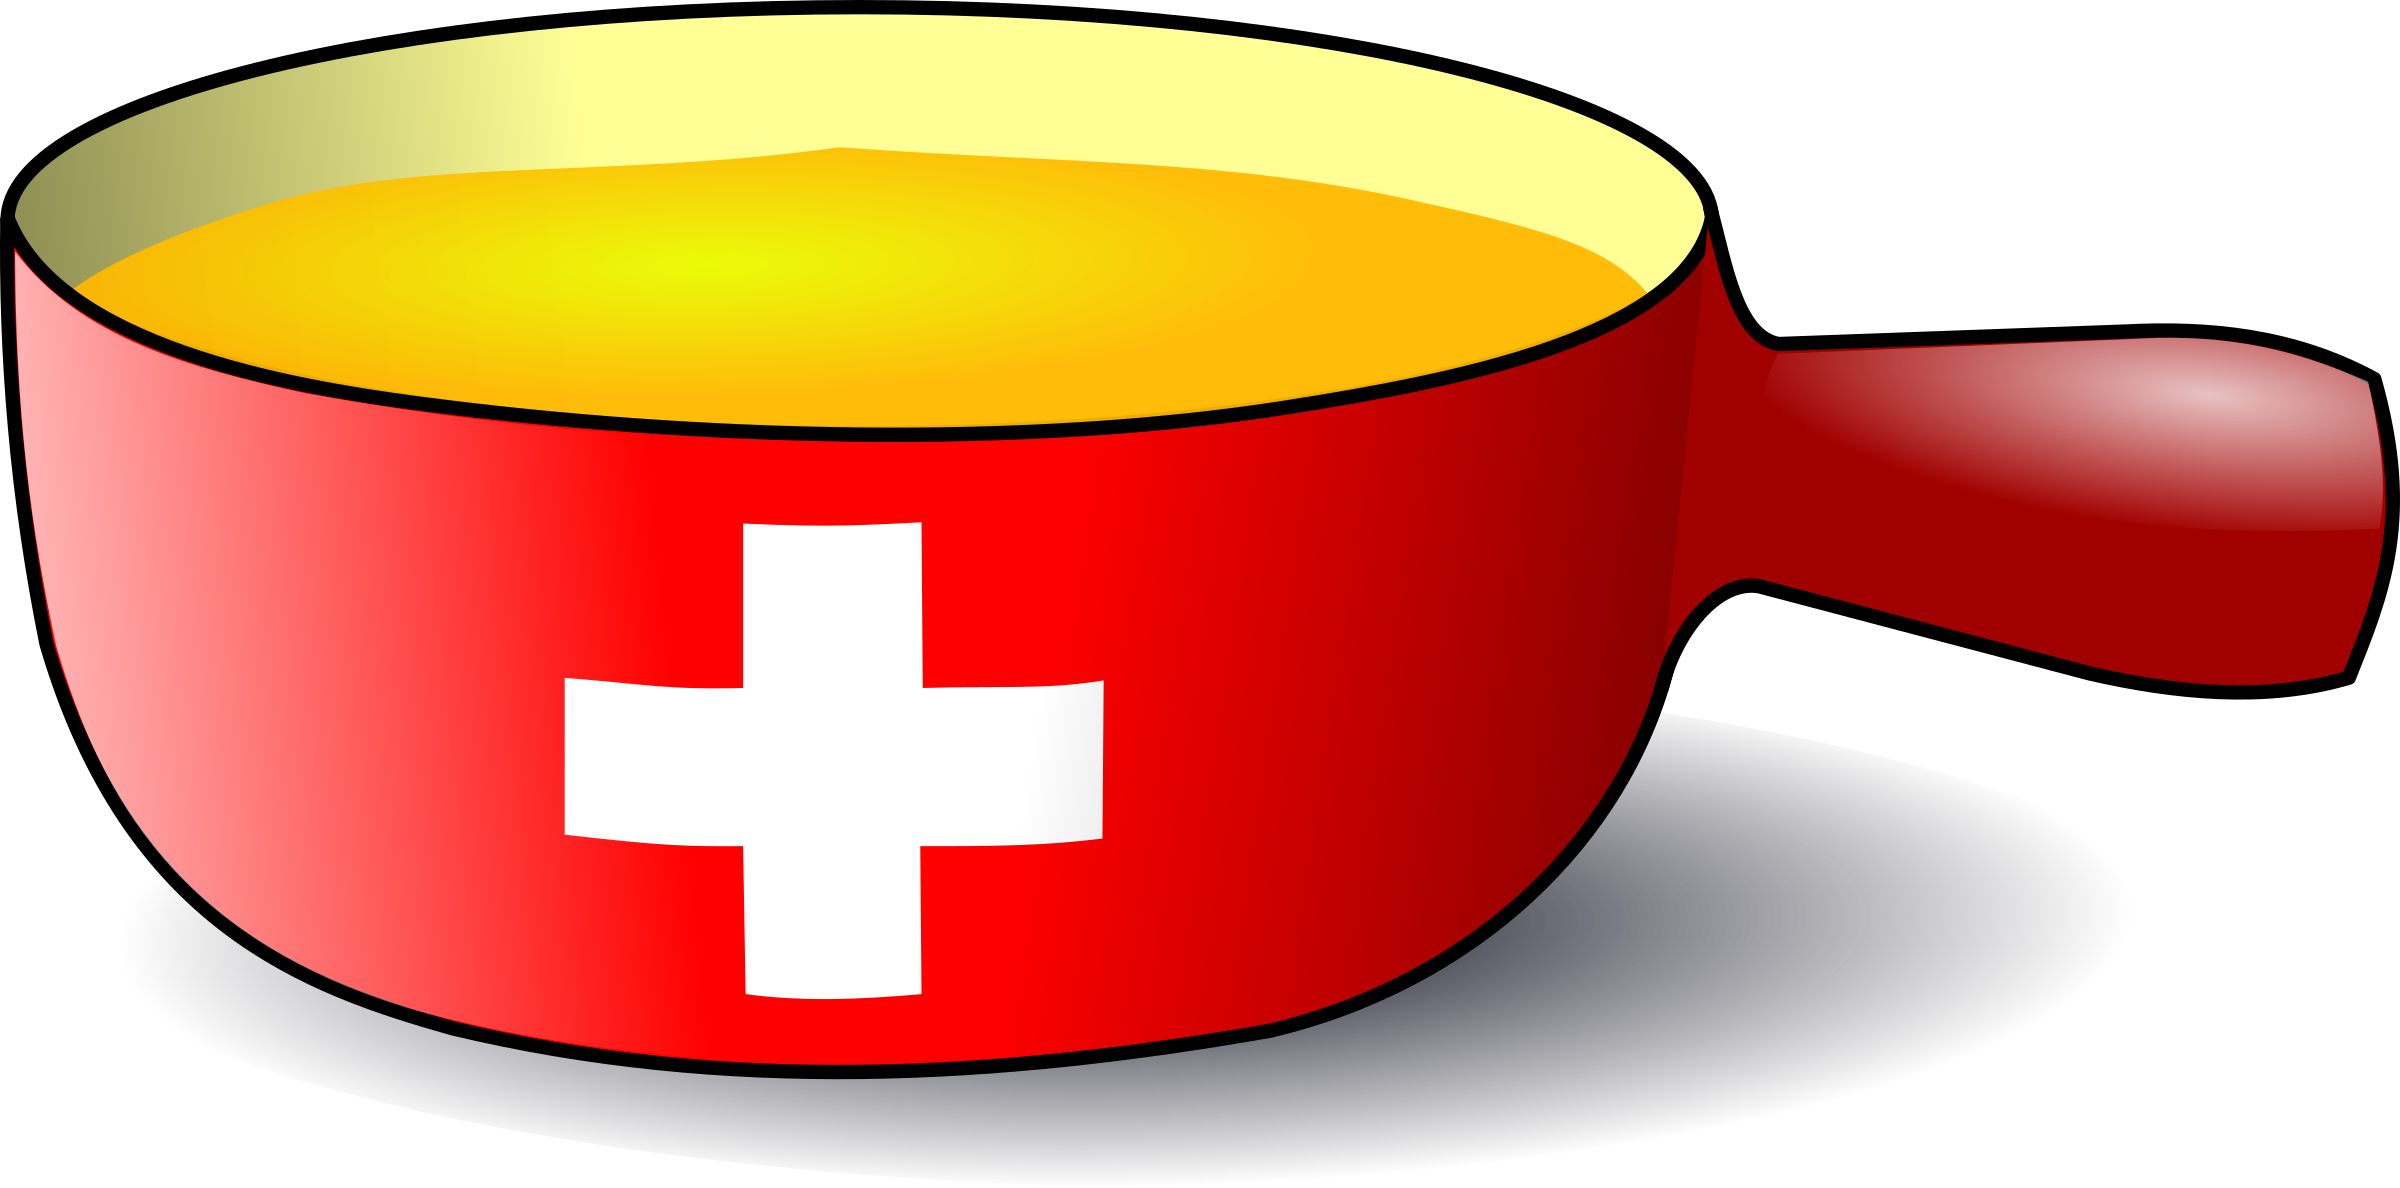 Swiss Caquelon Fondue By Martouf